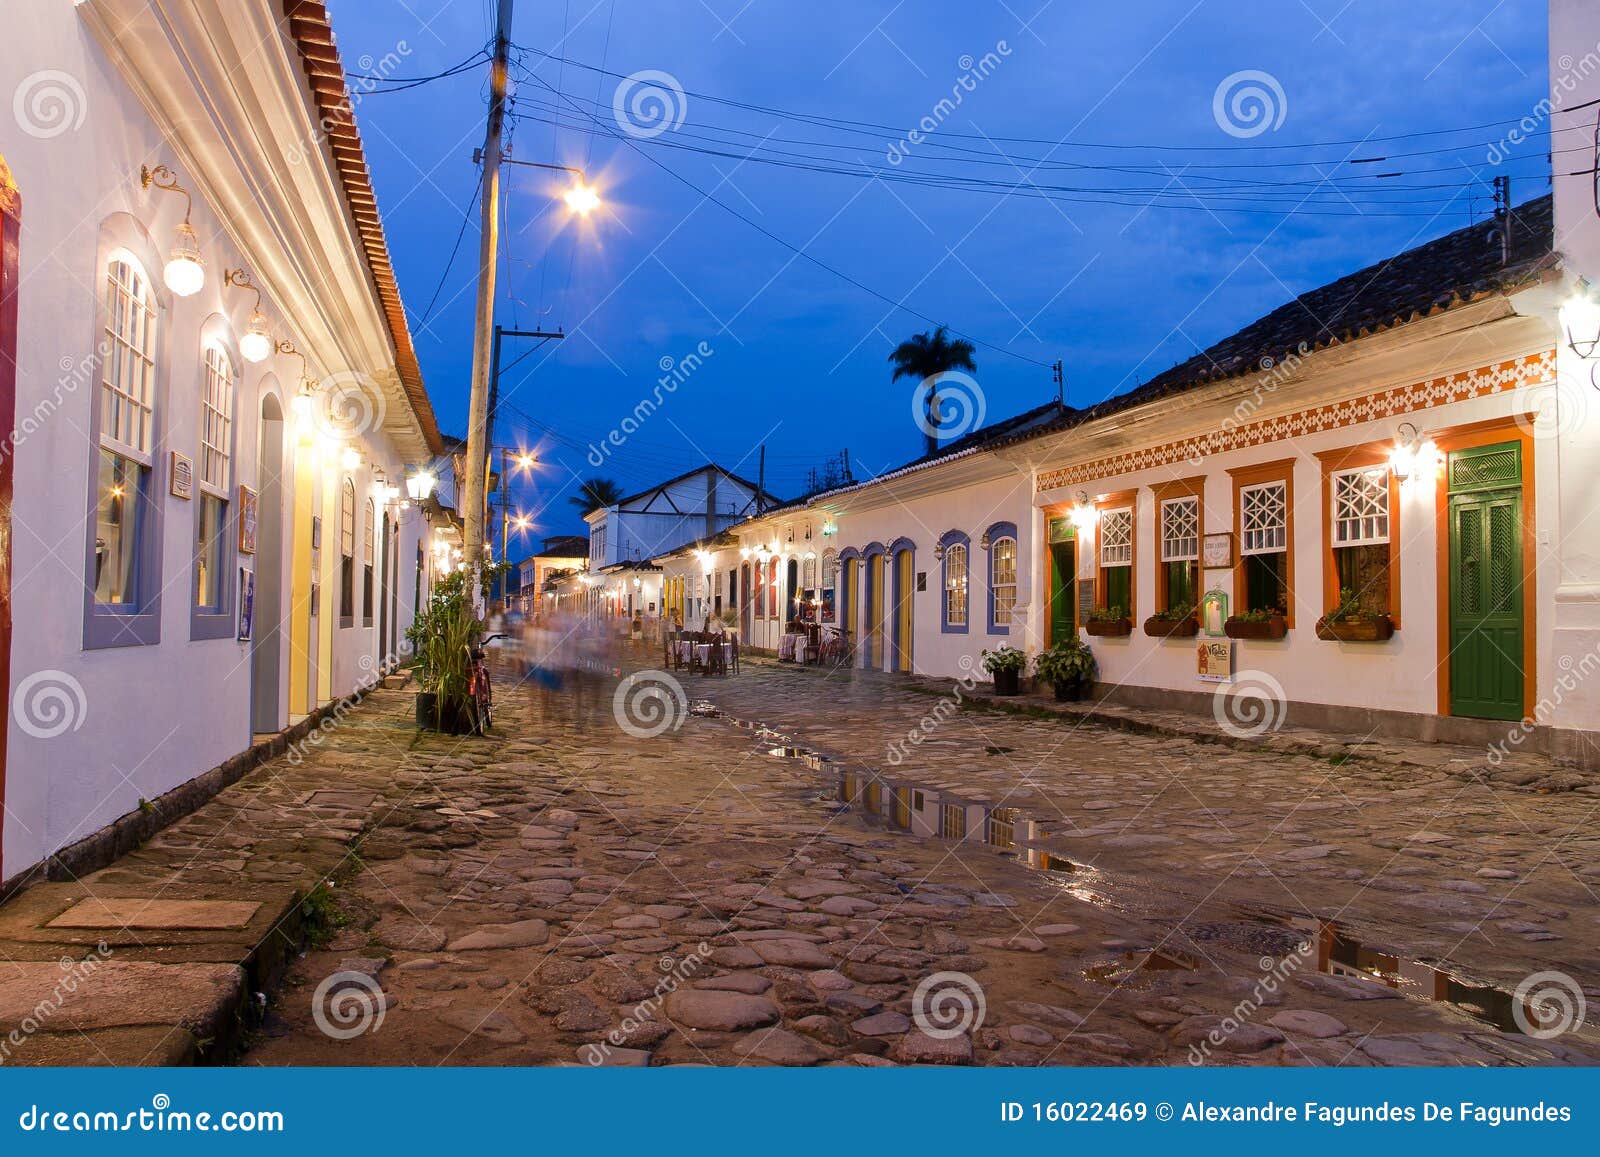 paraty historical city at night